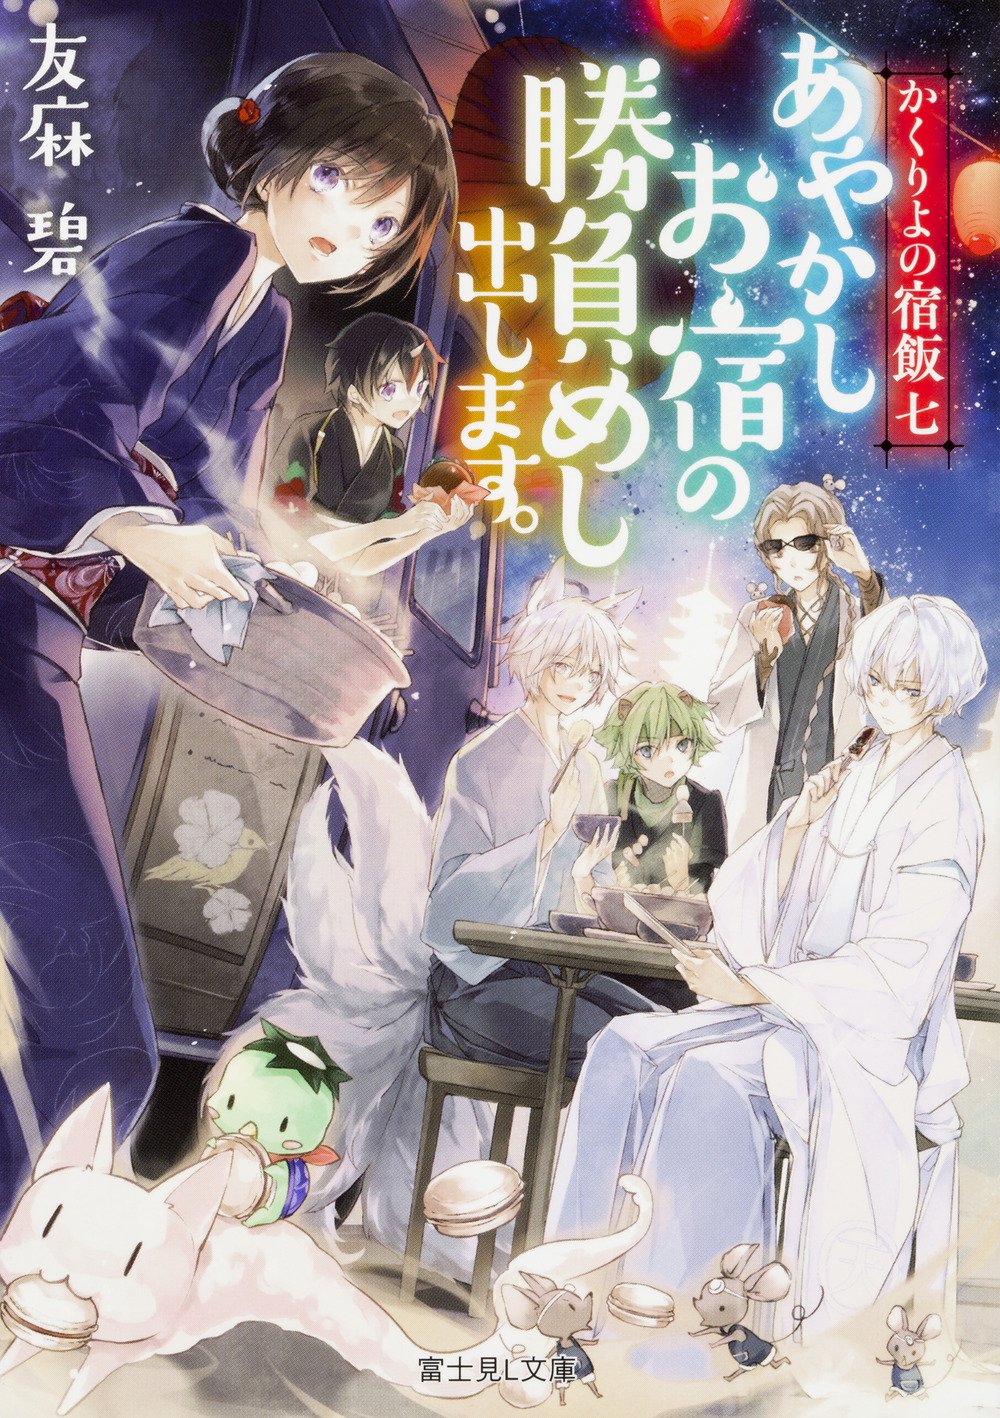 Classroom of the Elite Vol. 7 (Light Novel) - Tokyo Otaku Mode (TOM)